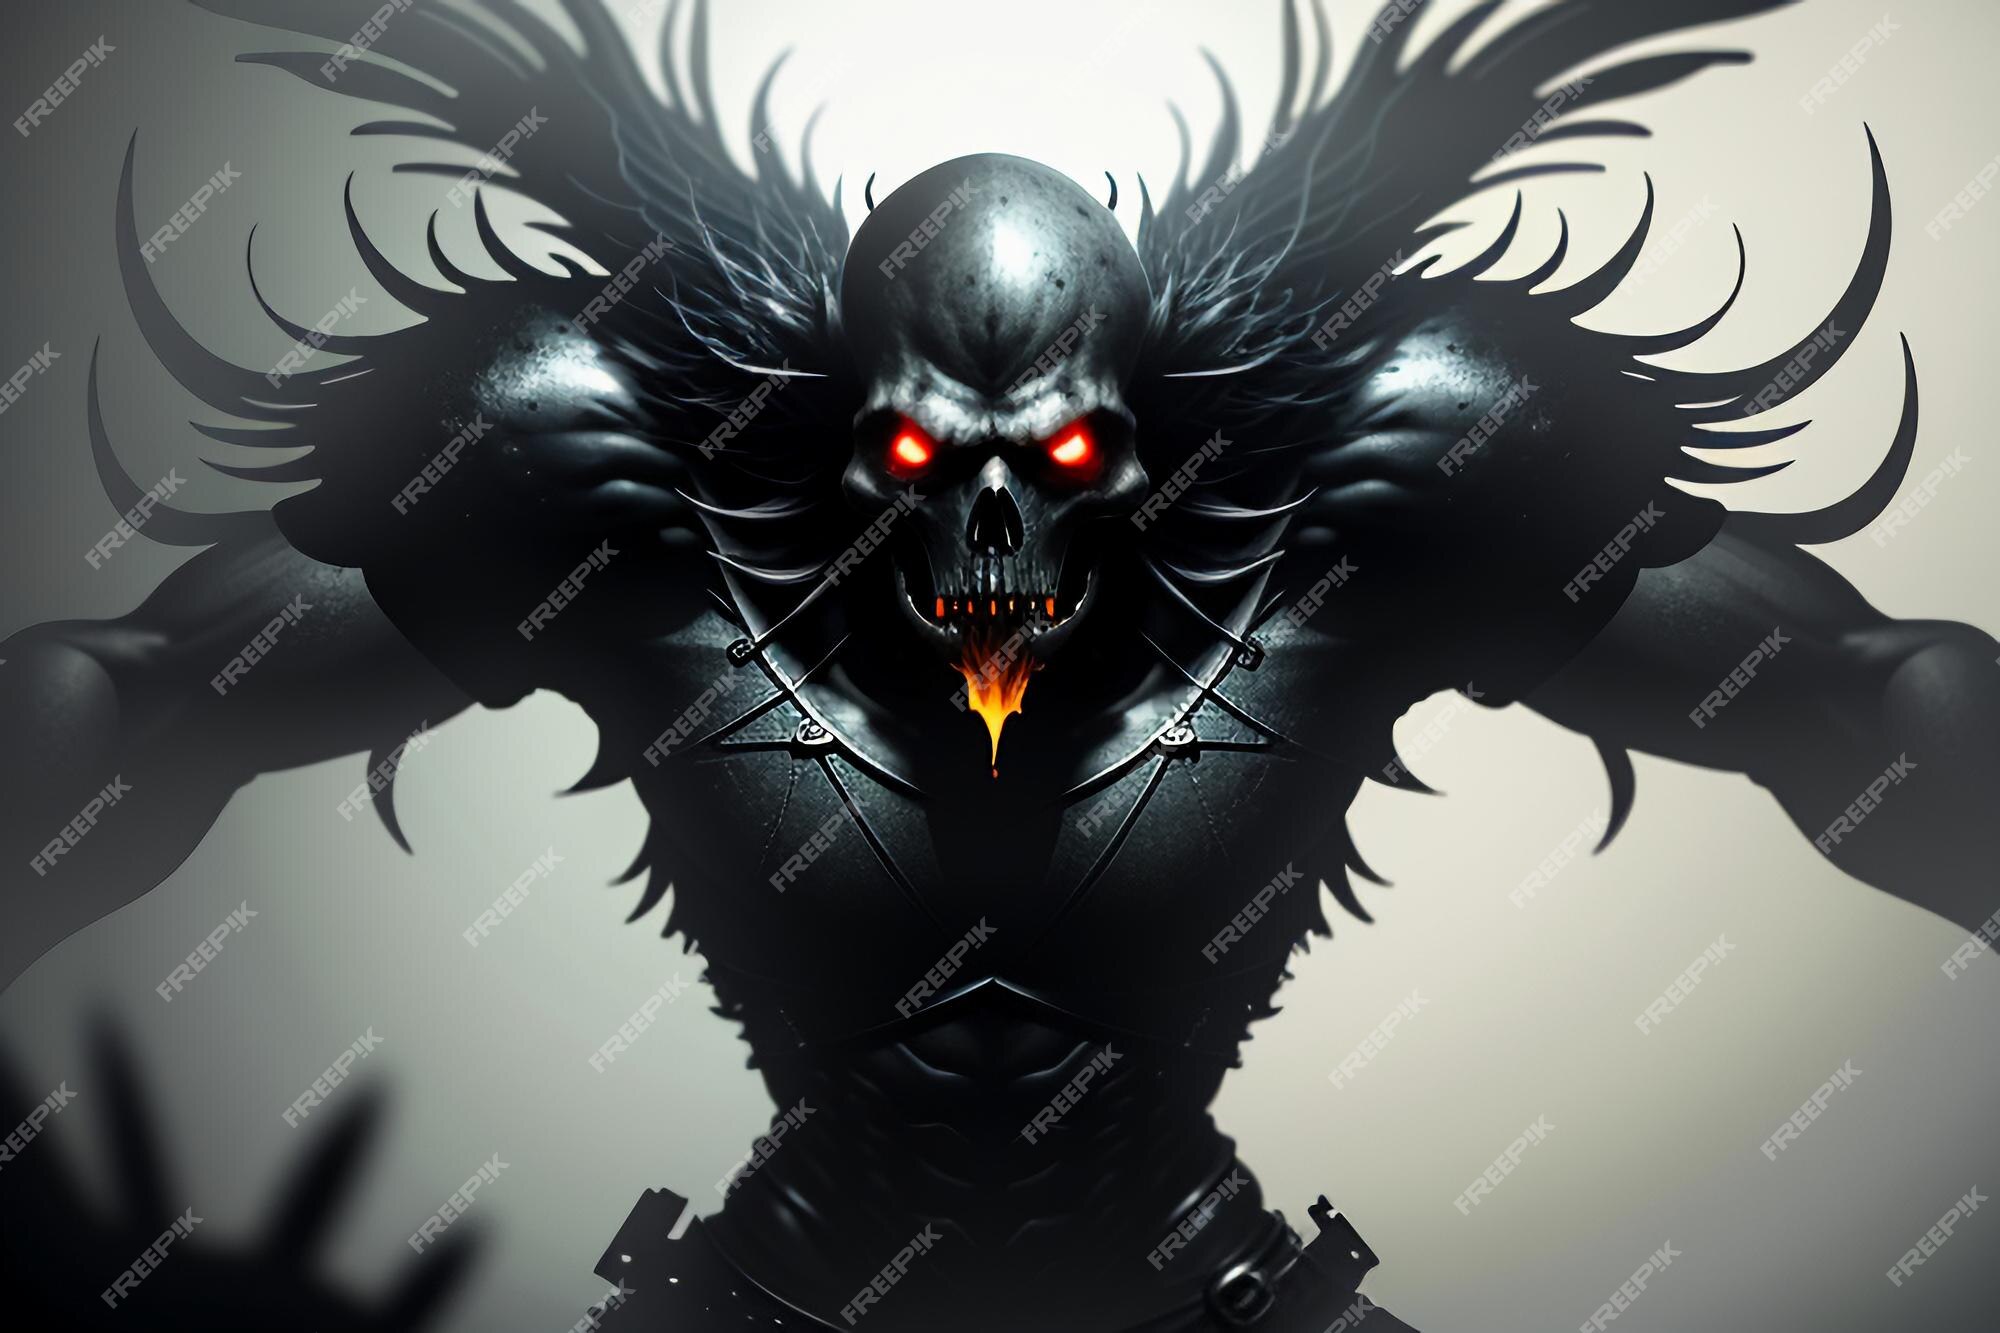 Monstro de terror monstro perigoso jogo de morte personagem